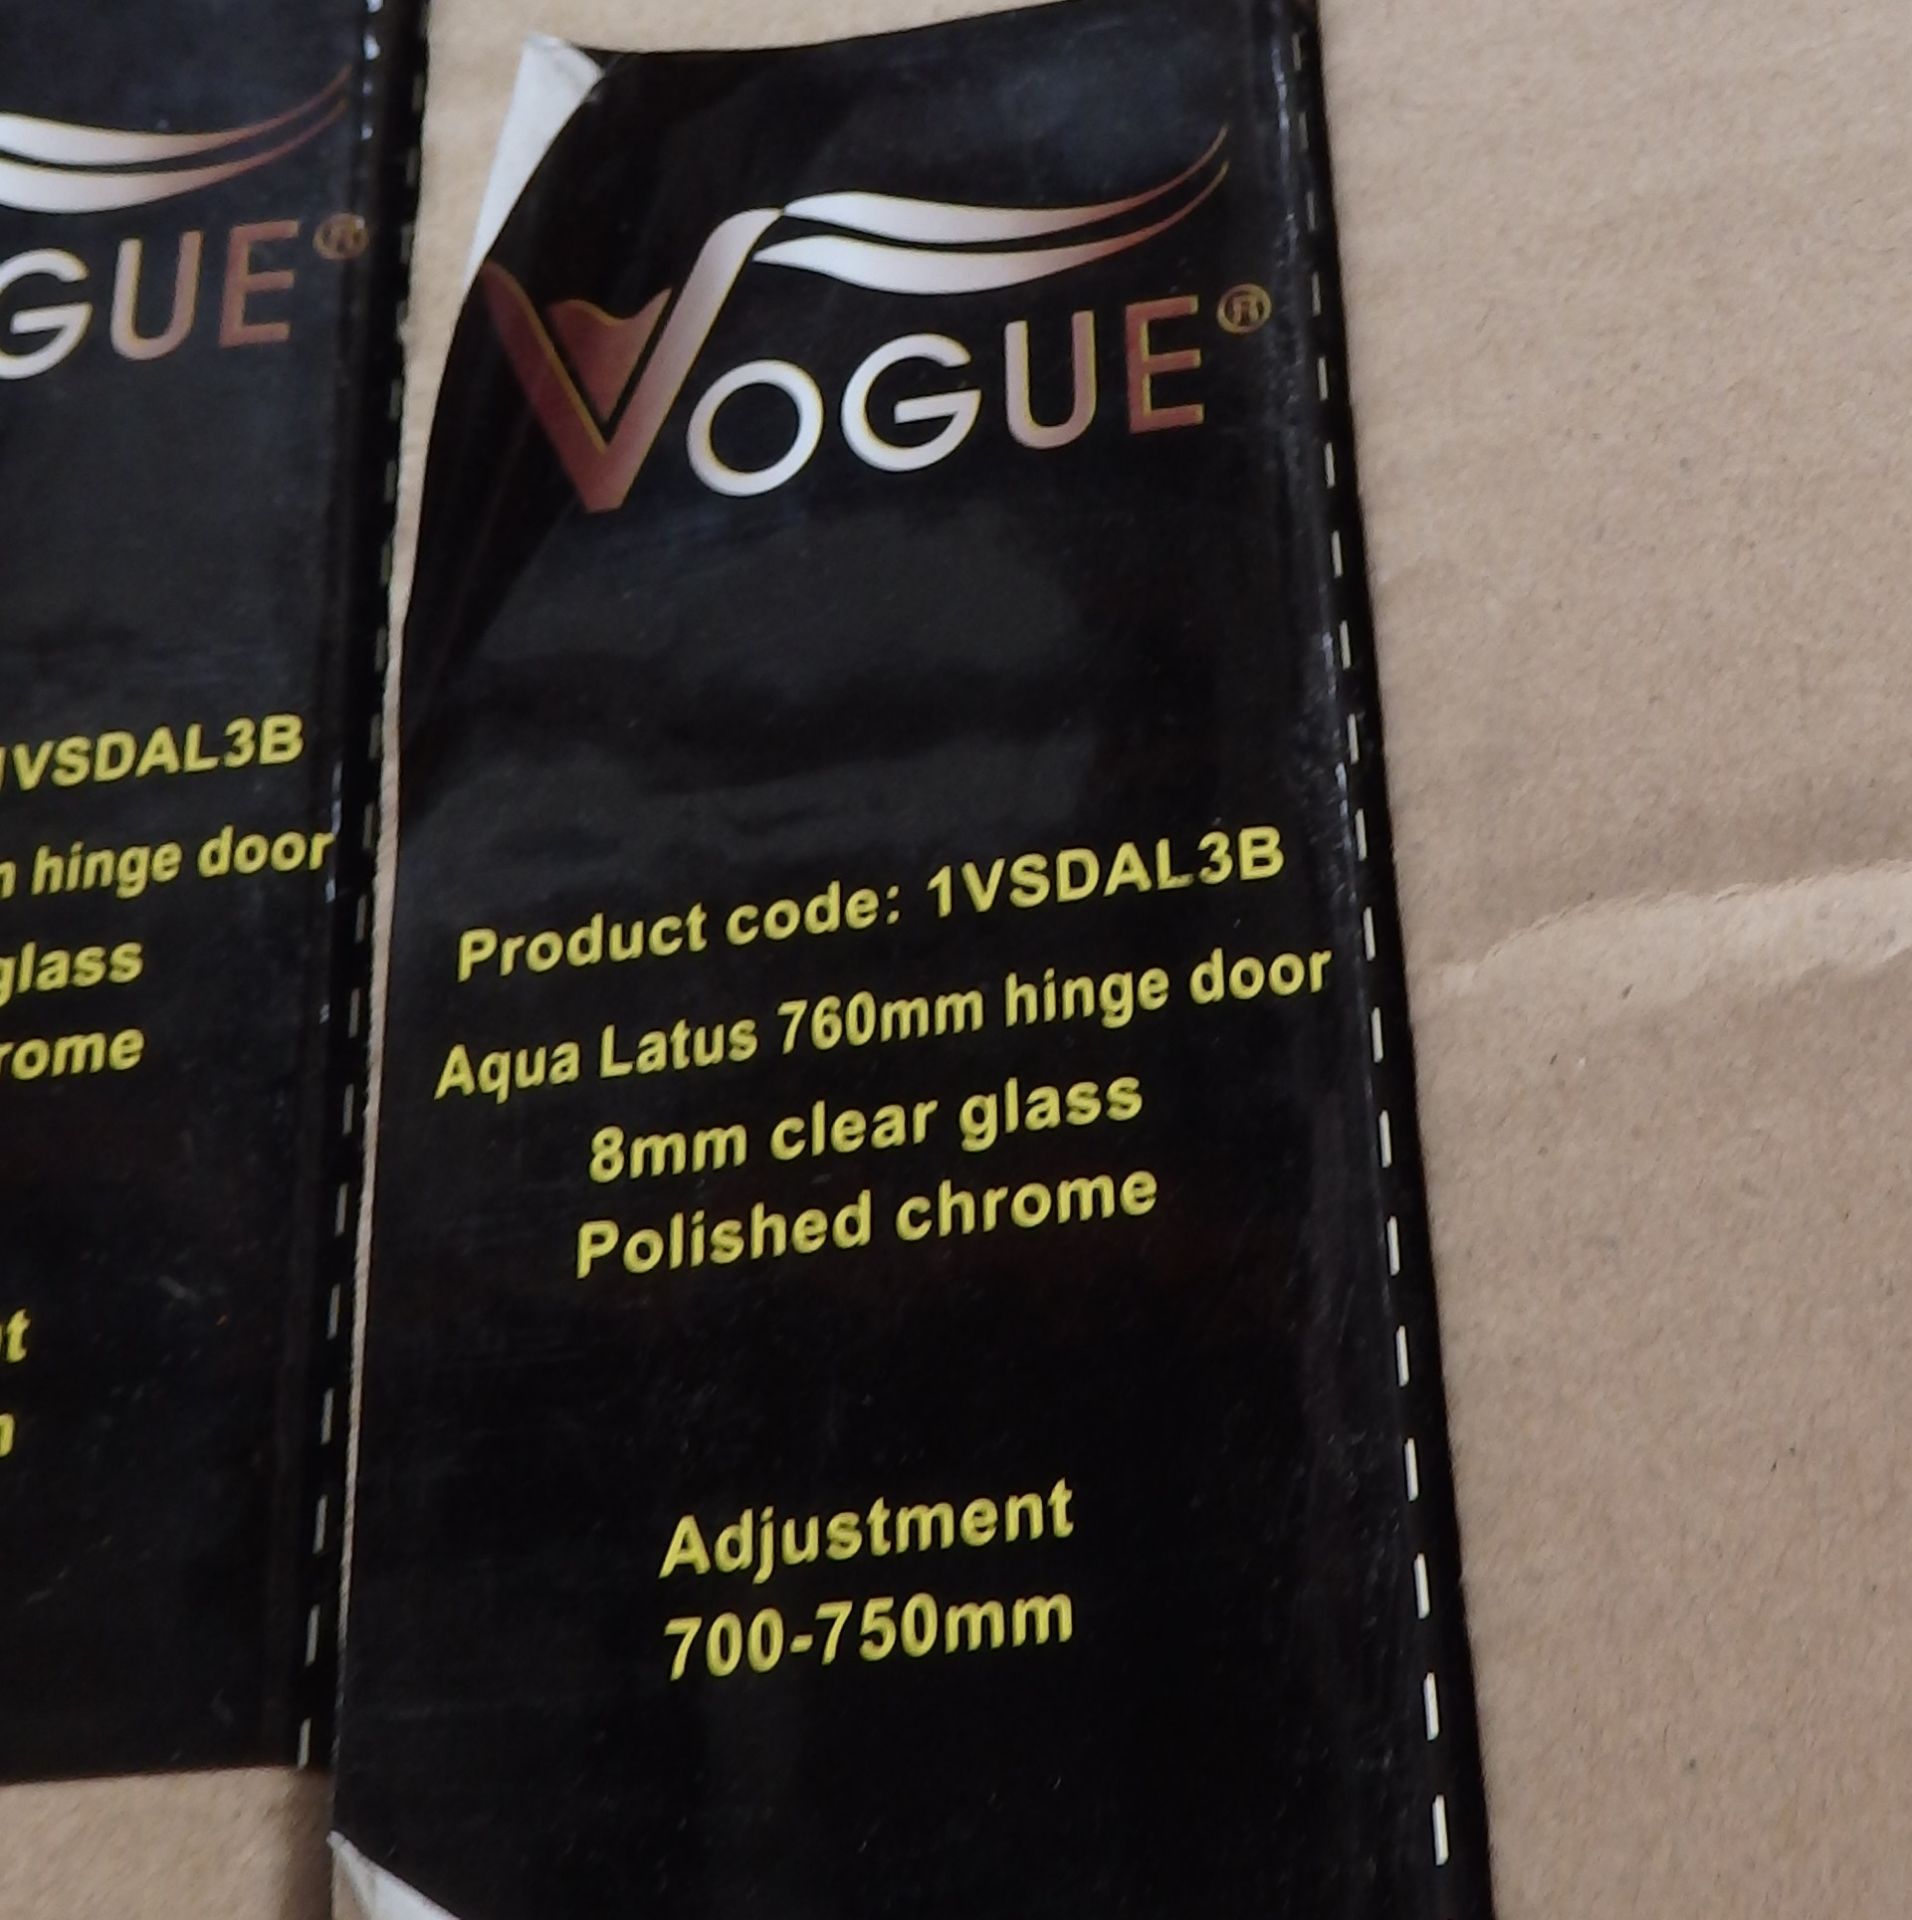 1 x Vogue Bathrooms Aqua Latus 760 Hinged Shower Door - Polished Chrome Finish - 8mm Clear Glass - - Image 2 of 2